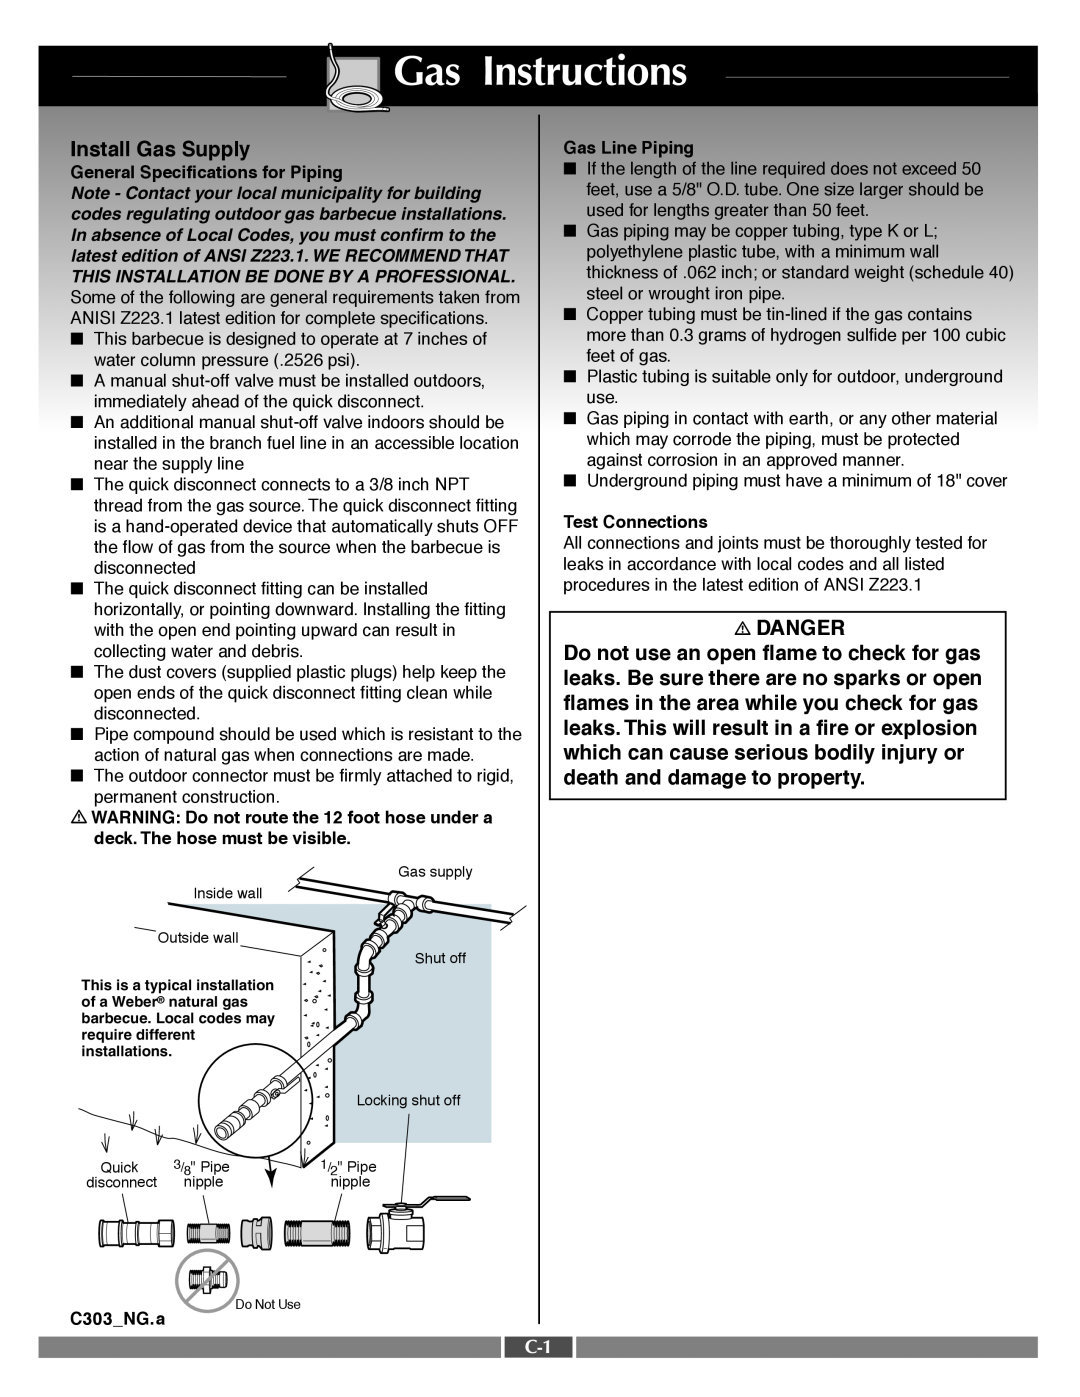 Weber 55548 manual Gas Instructions, Install Gas Supply, Danger 